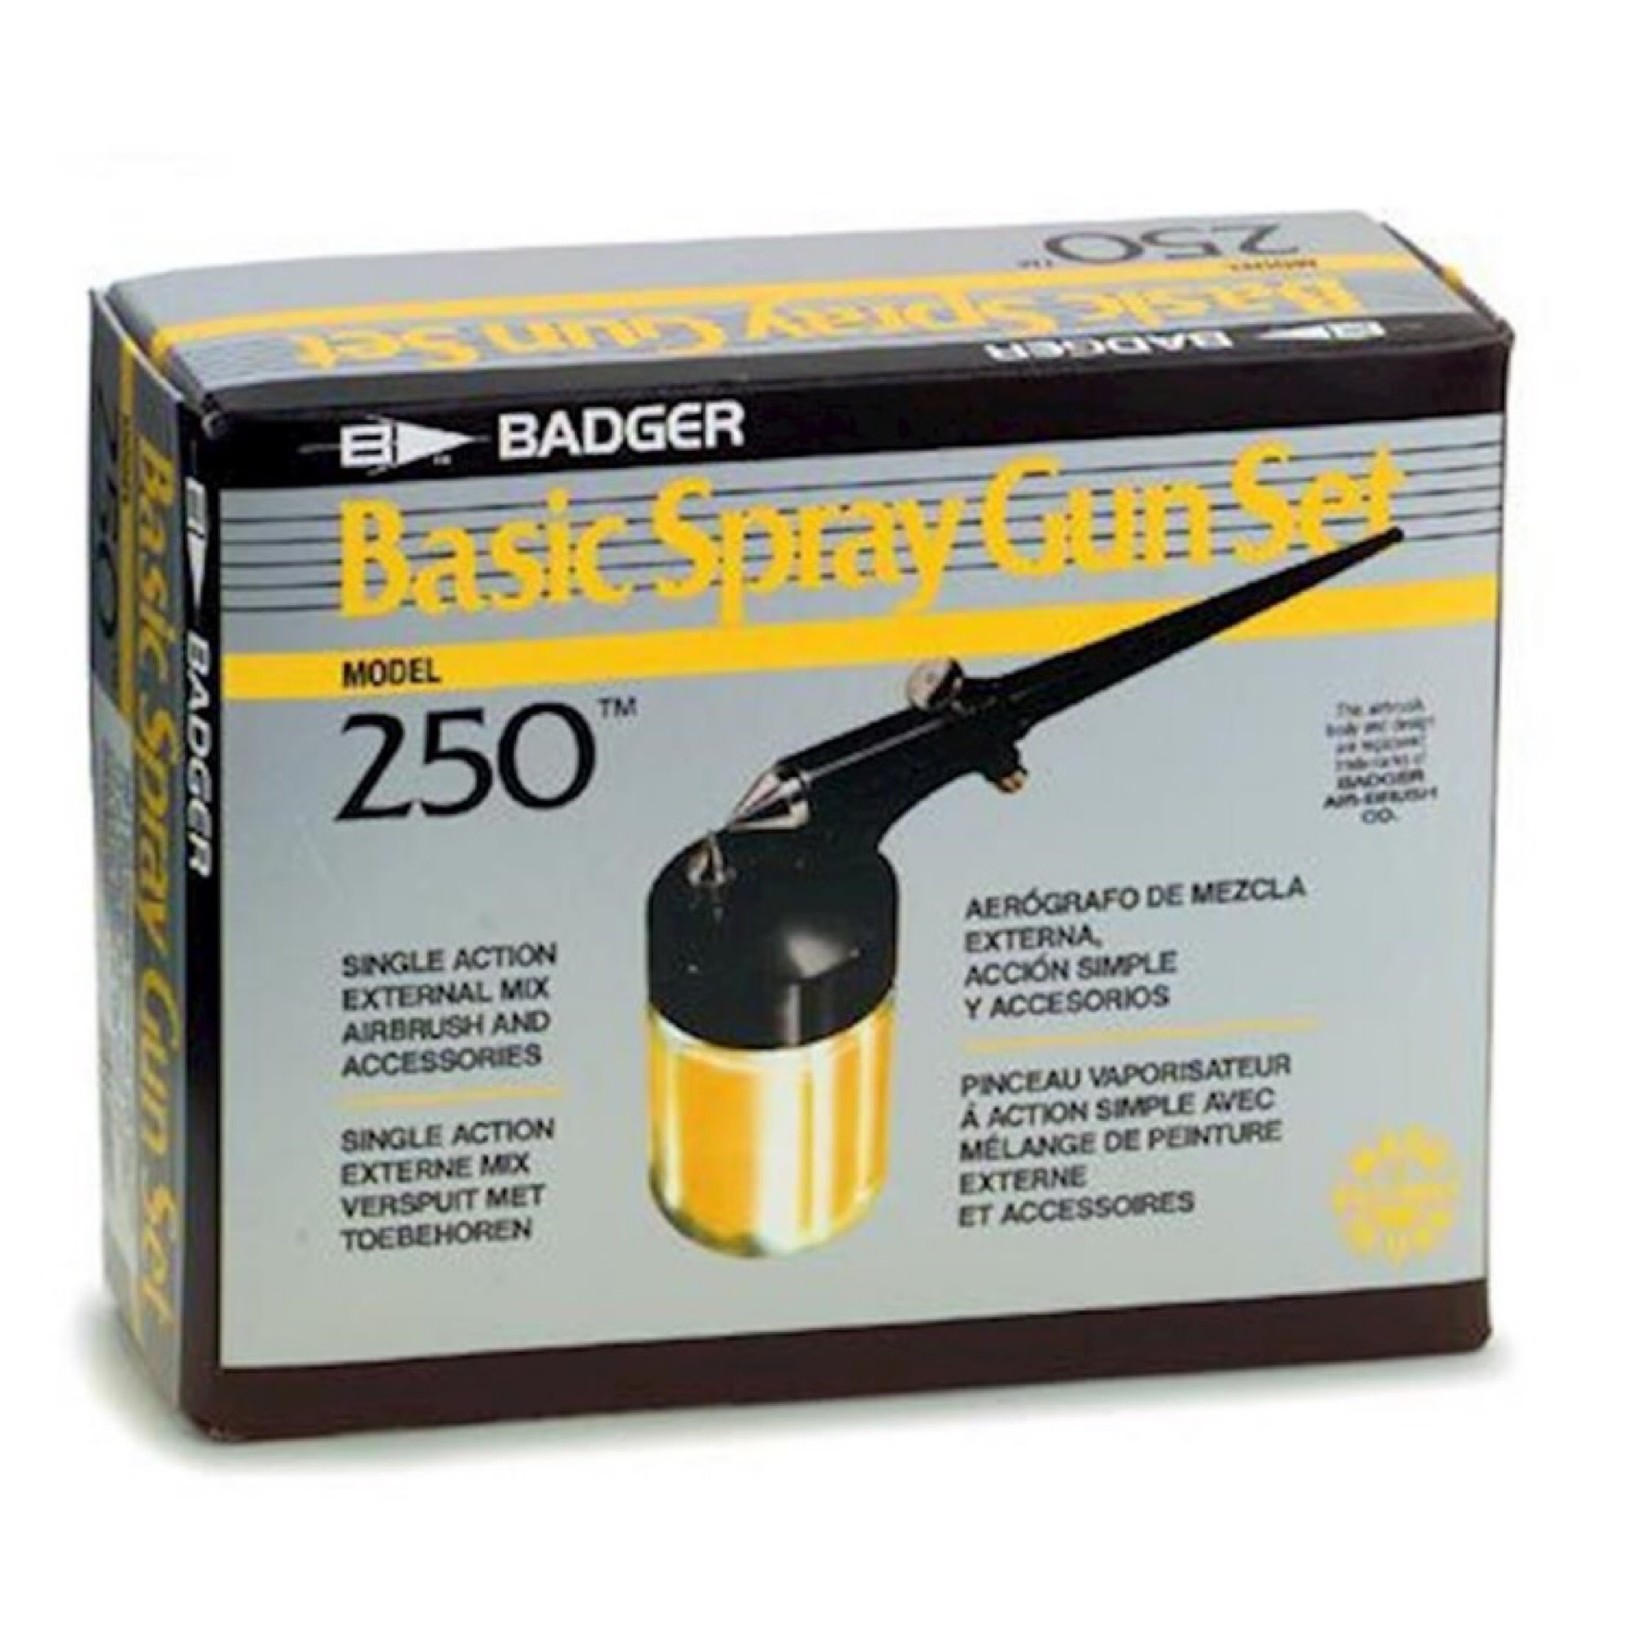 Badger Air-Brush Co. Badger Air-brush Co. 250 Spray Gun Set with Propellant #250-3